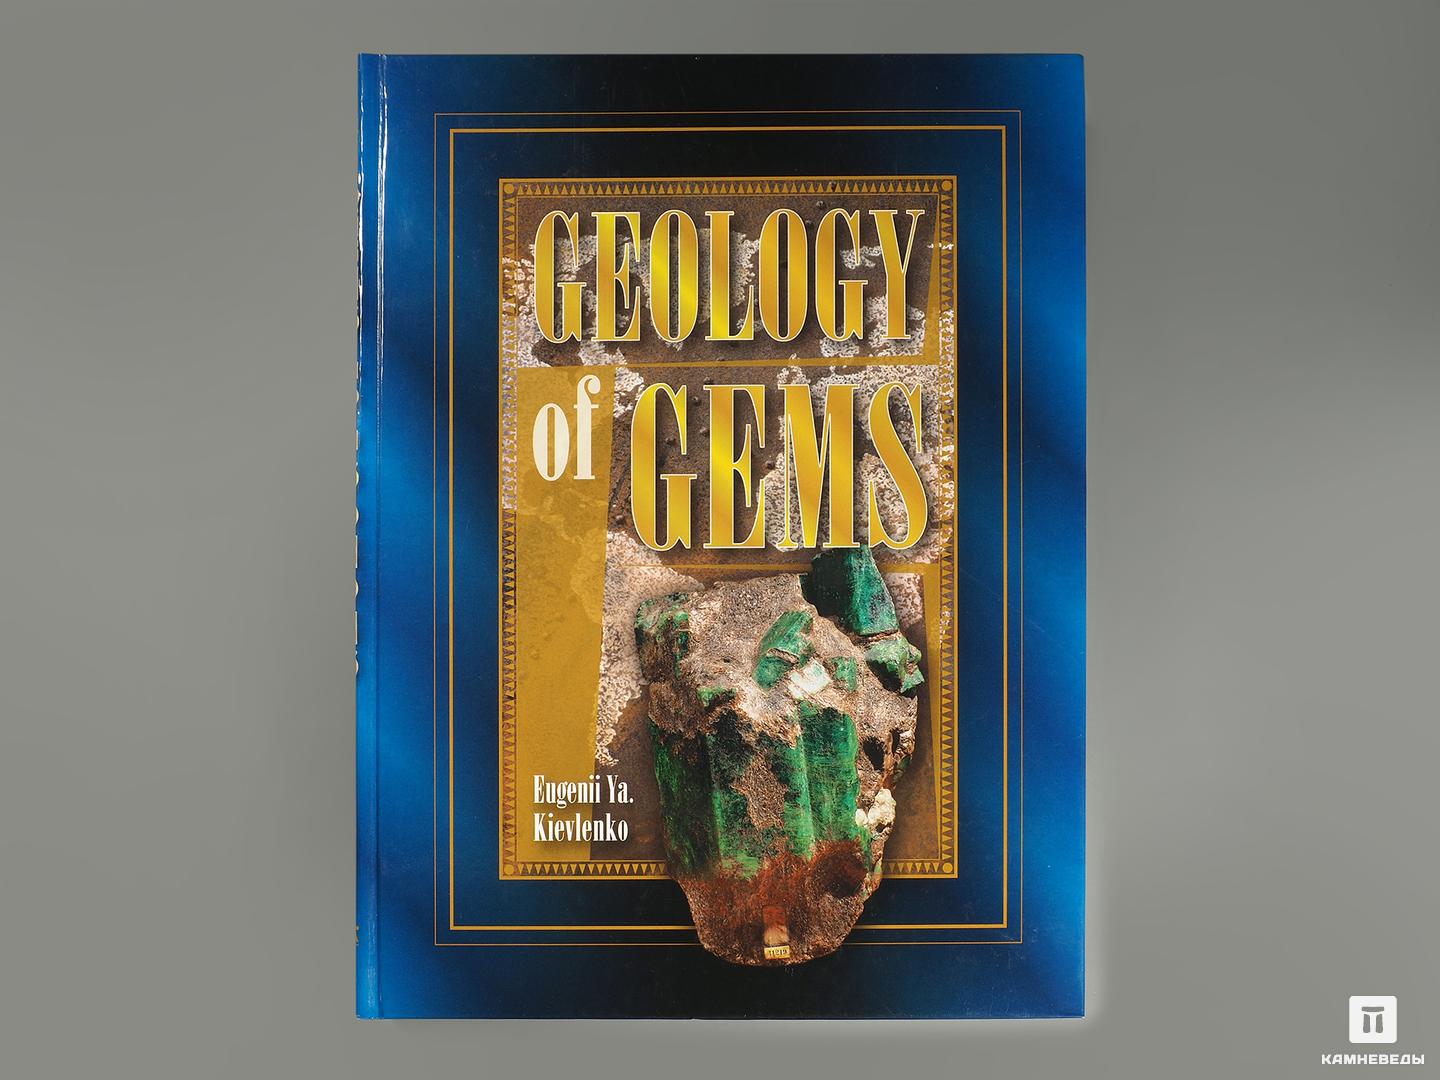 Книга: Eugenii Ya. Kievlenko «Geology of gems» три поросенка the three little pigs на английском языке